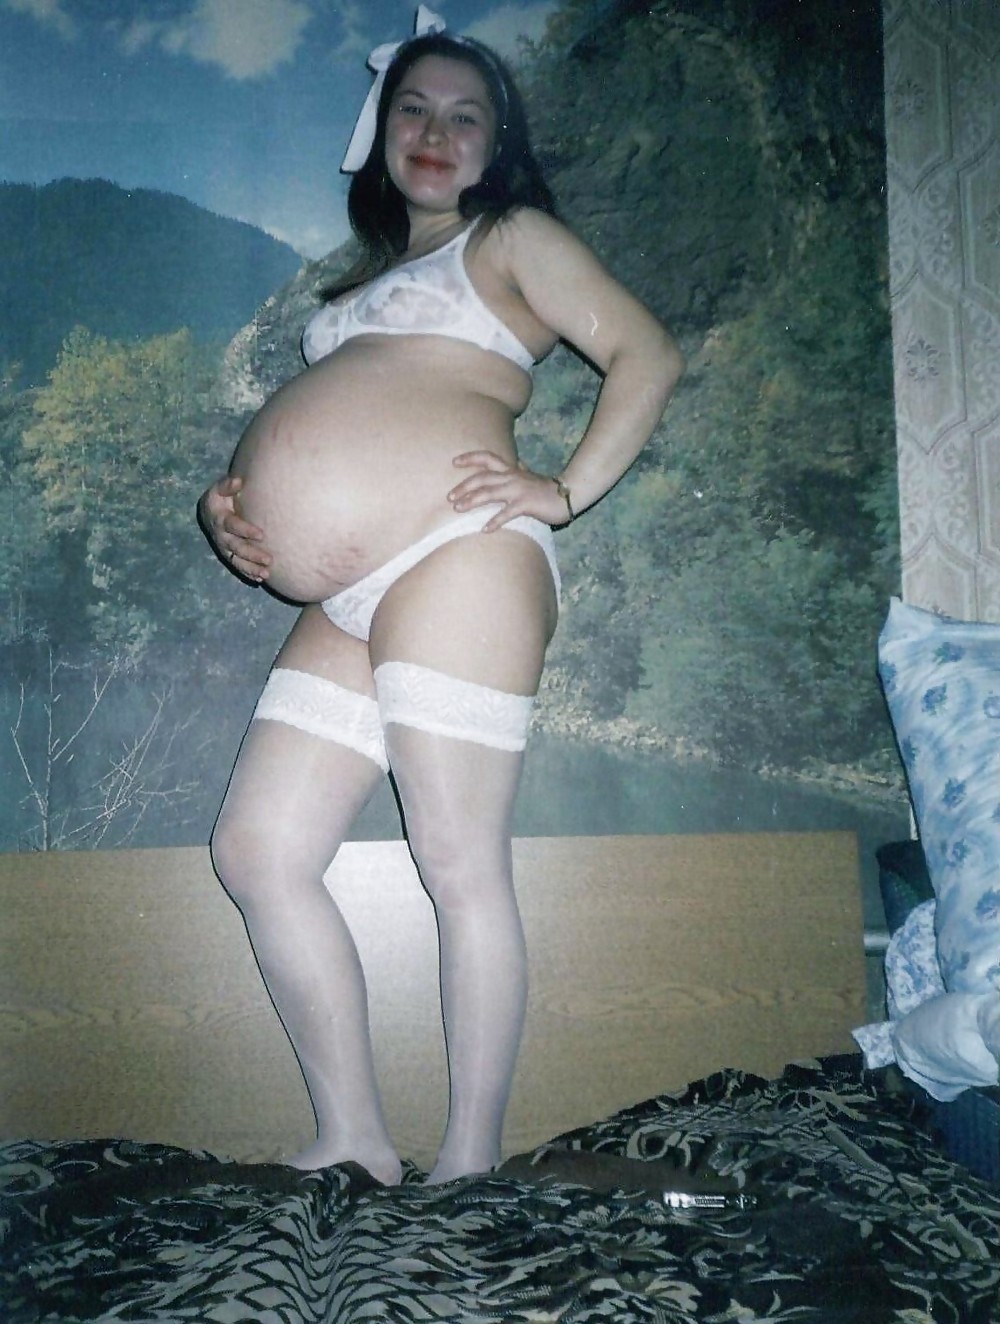 Pregnant babe's adult photos